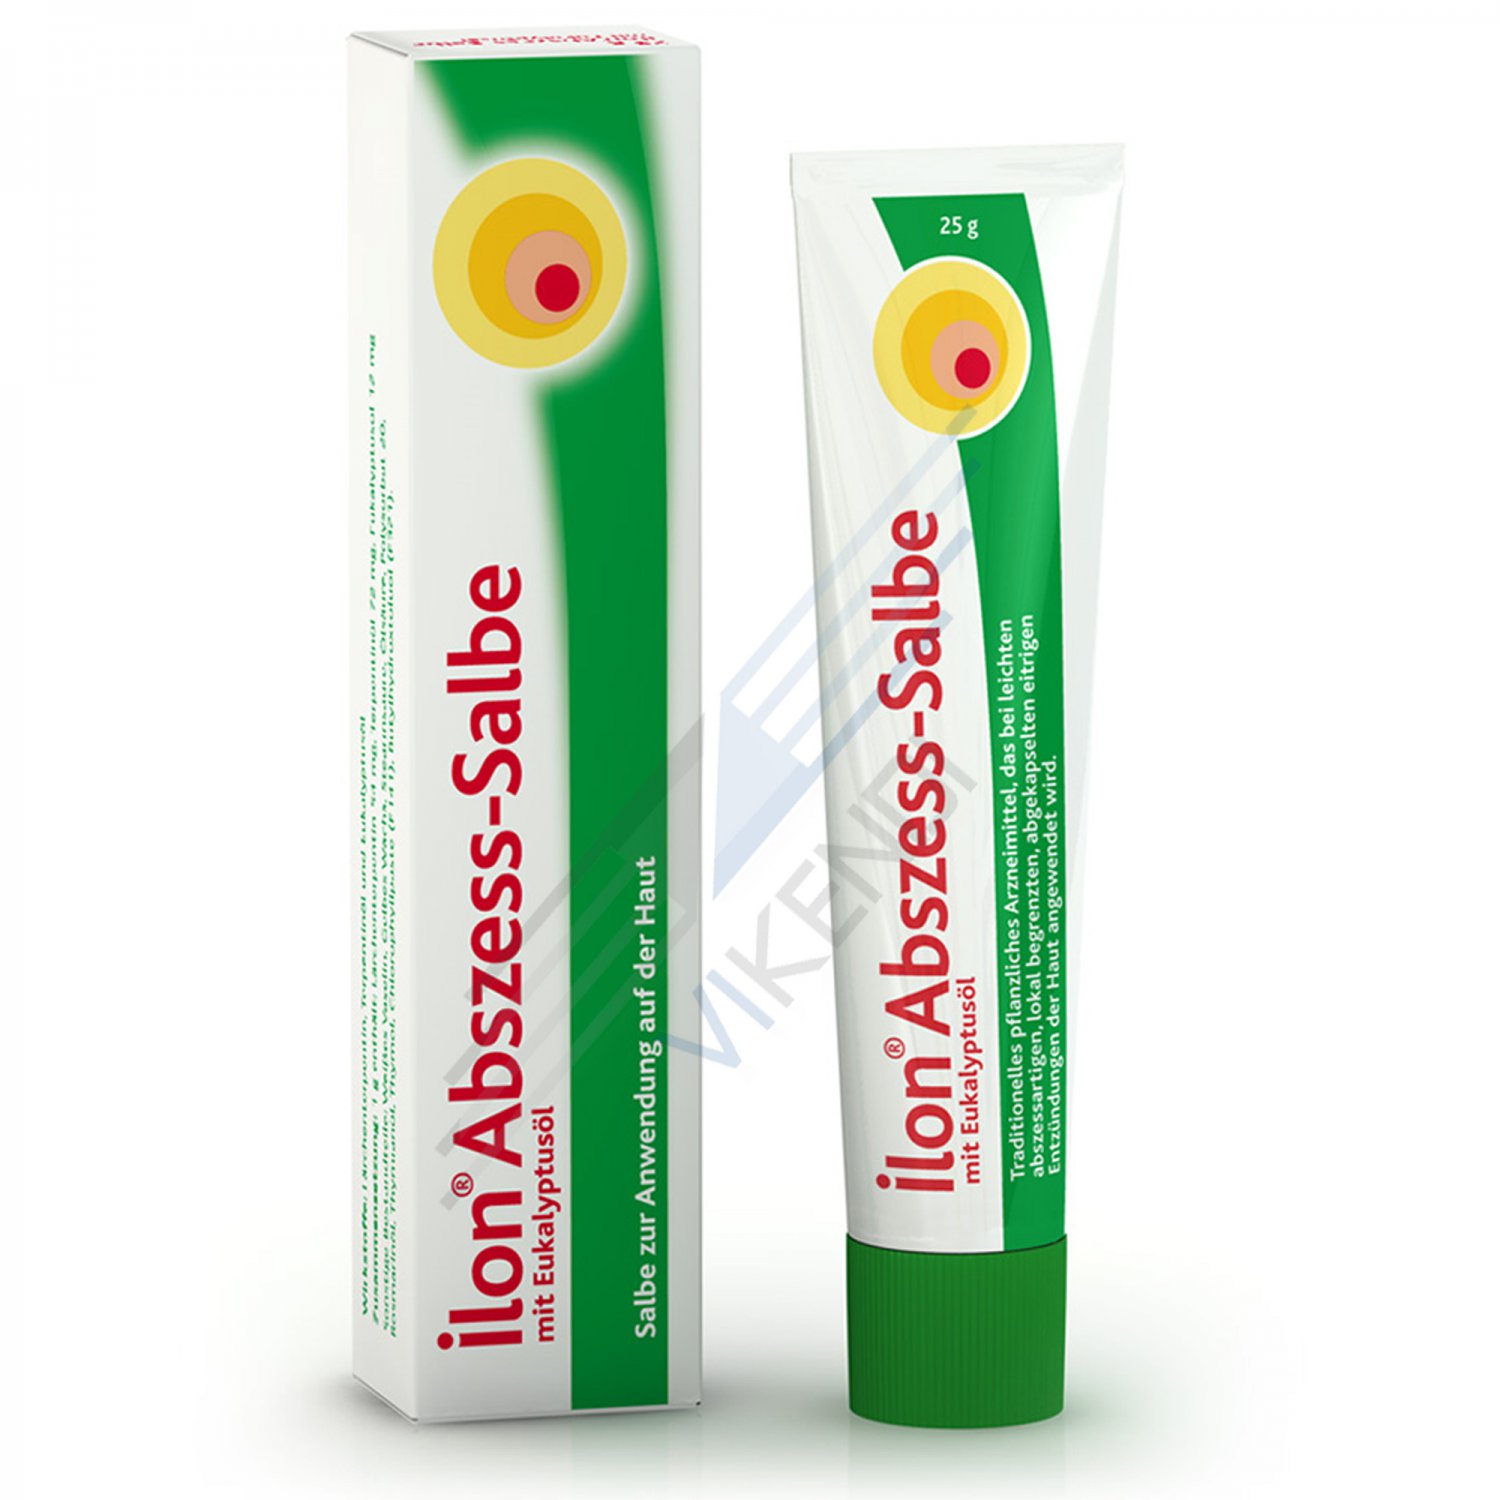 Ilon Abszess-Salbe Cream for Sweat Gland Inflammation Folliculitis 25g.